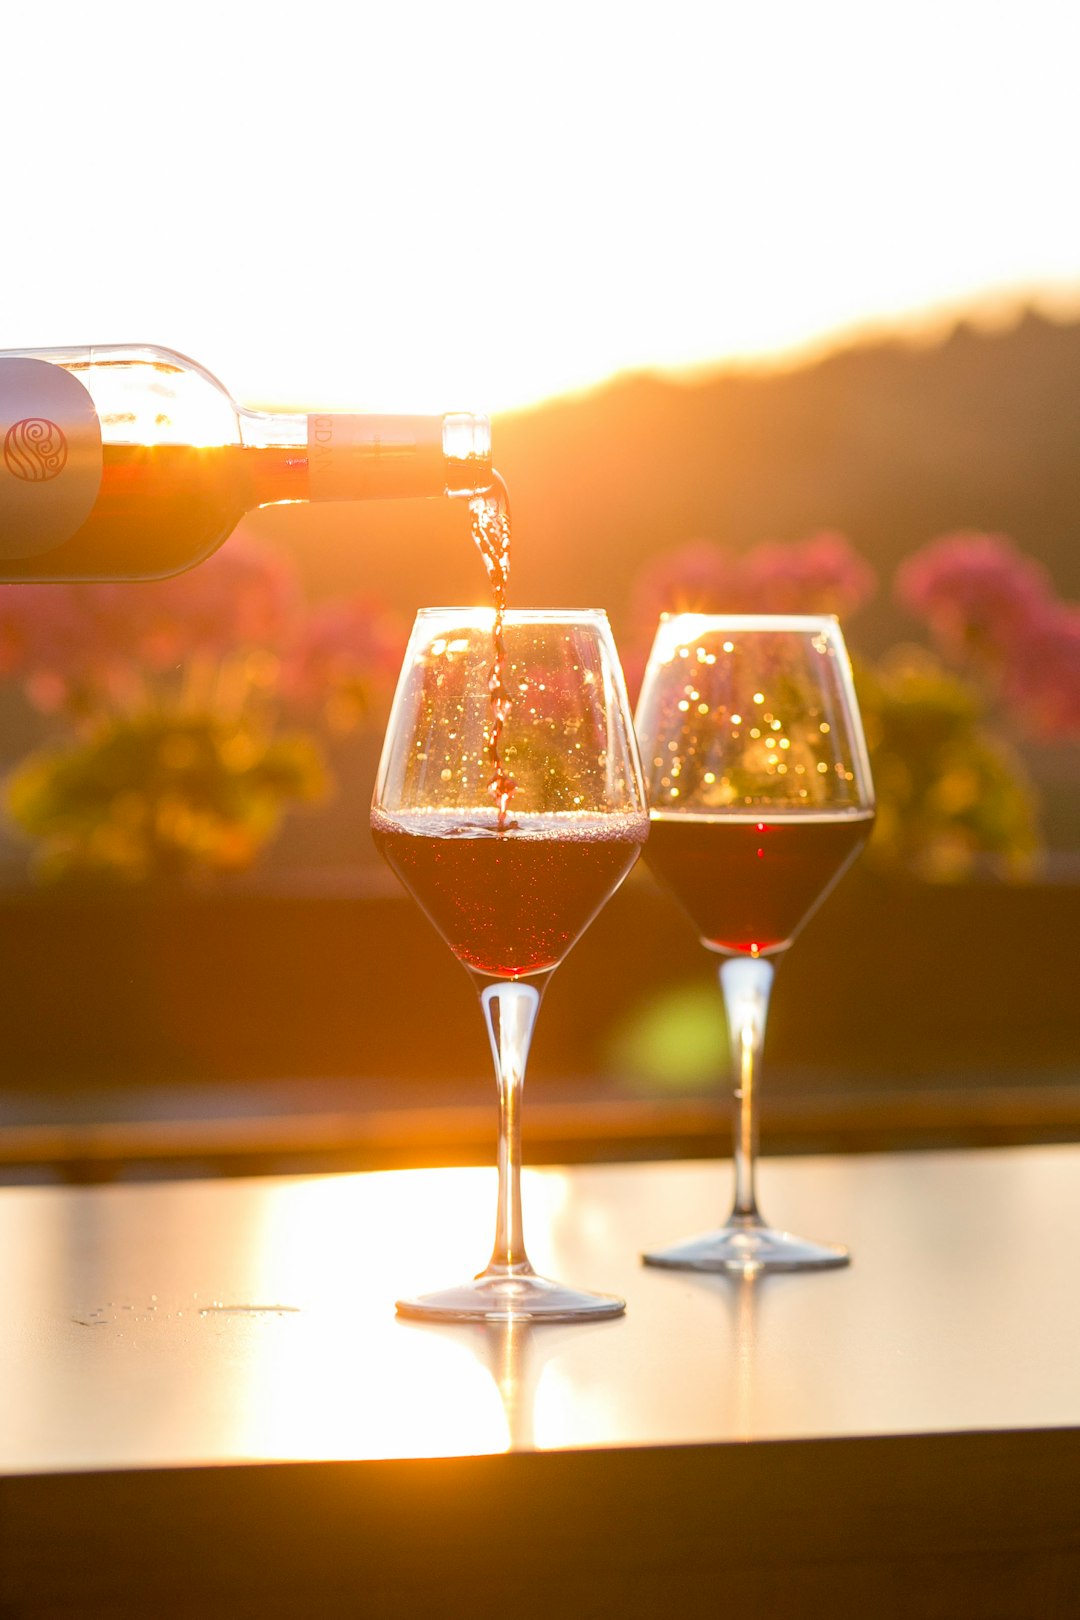 Sunset and wine